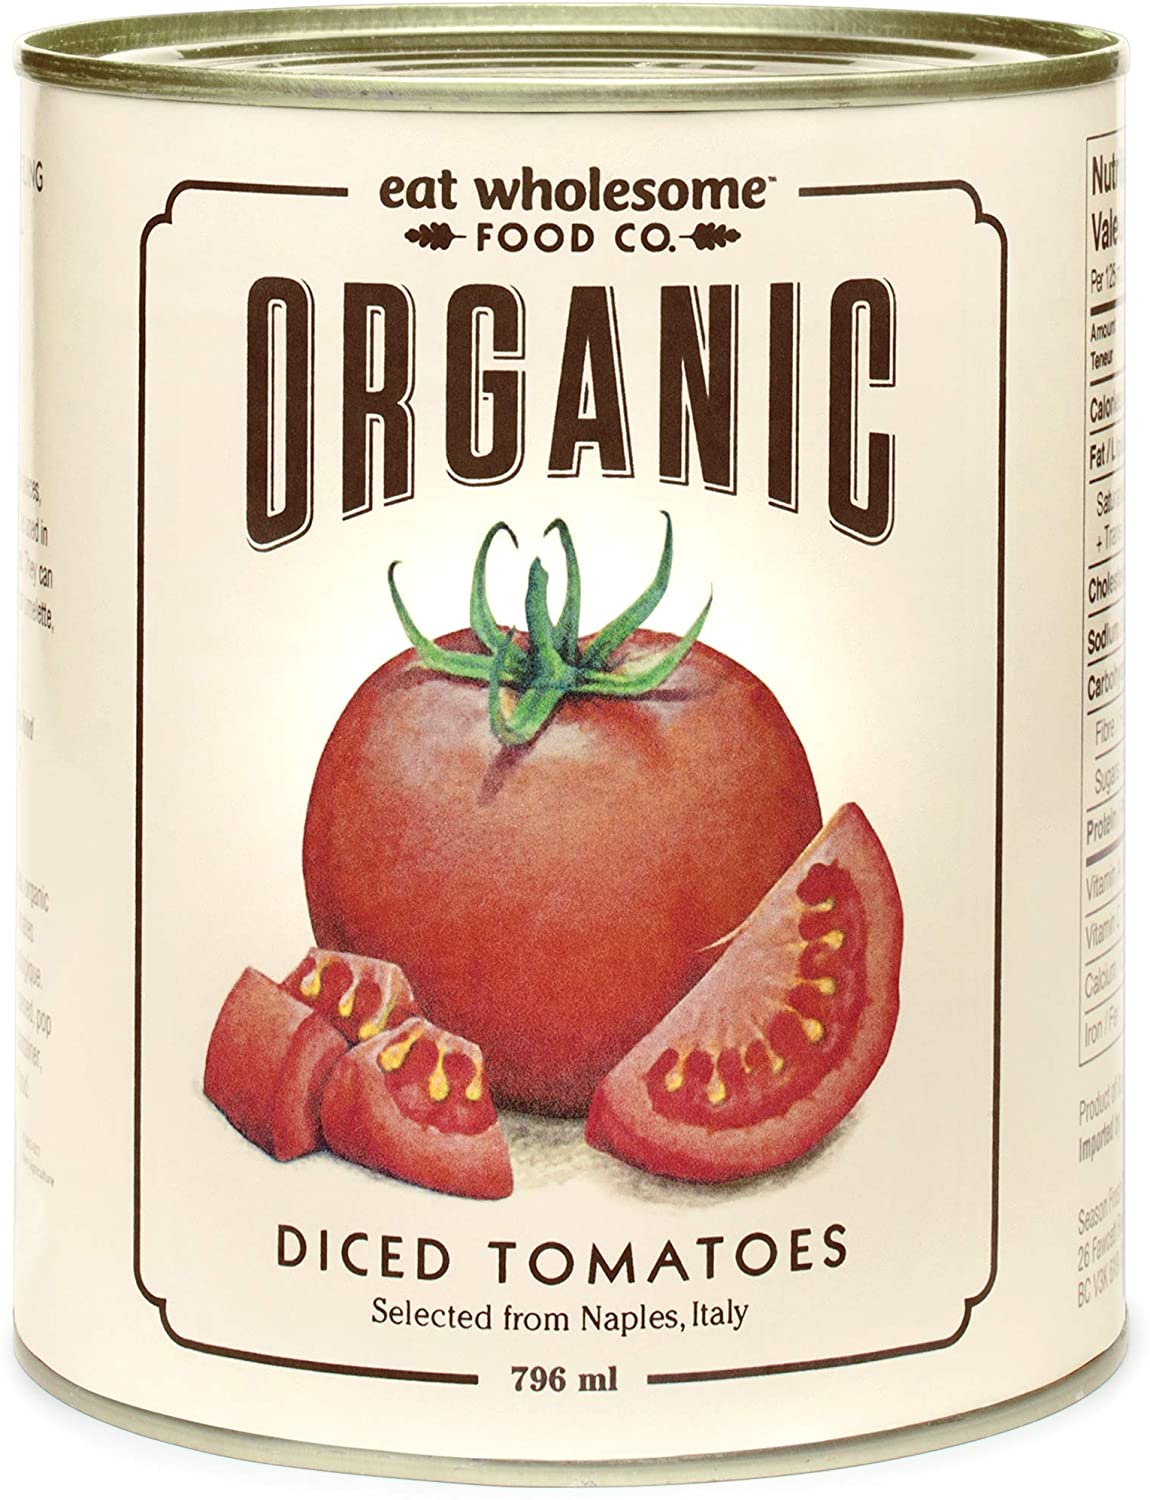 Tomates hachées (398 ml)